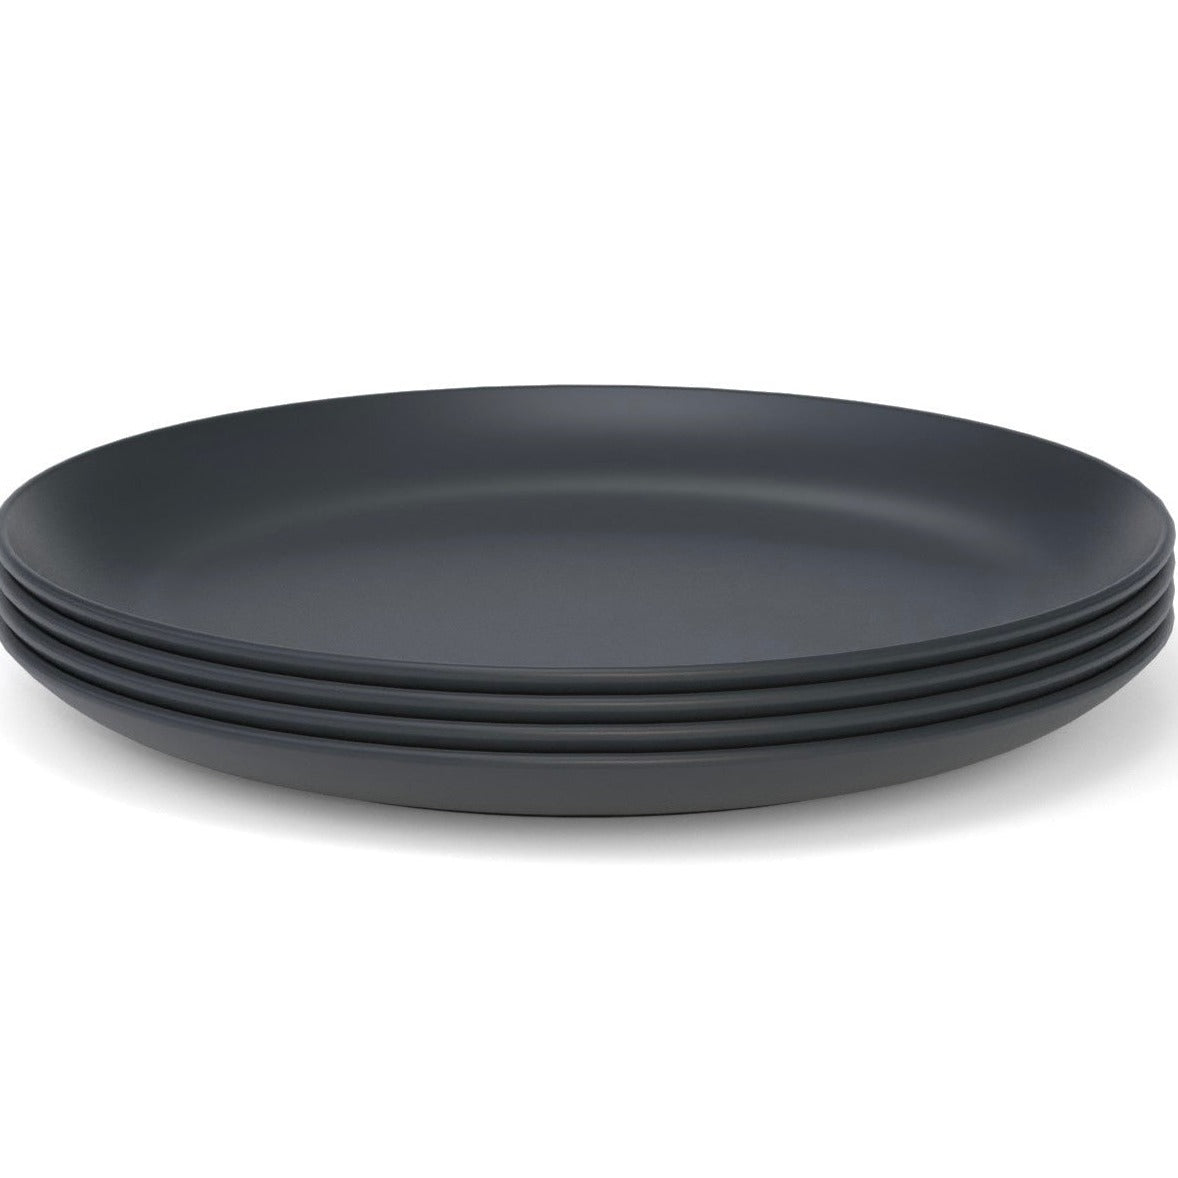 11" Round Dinner Plate, Set of 4 - Black